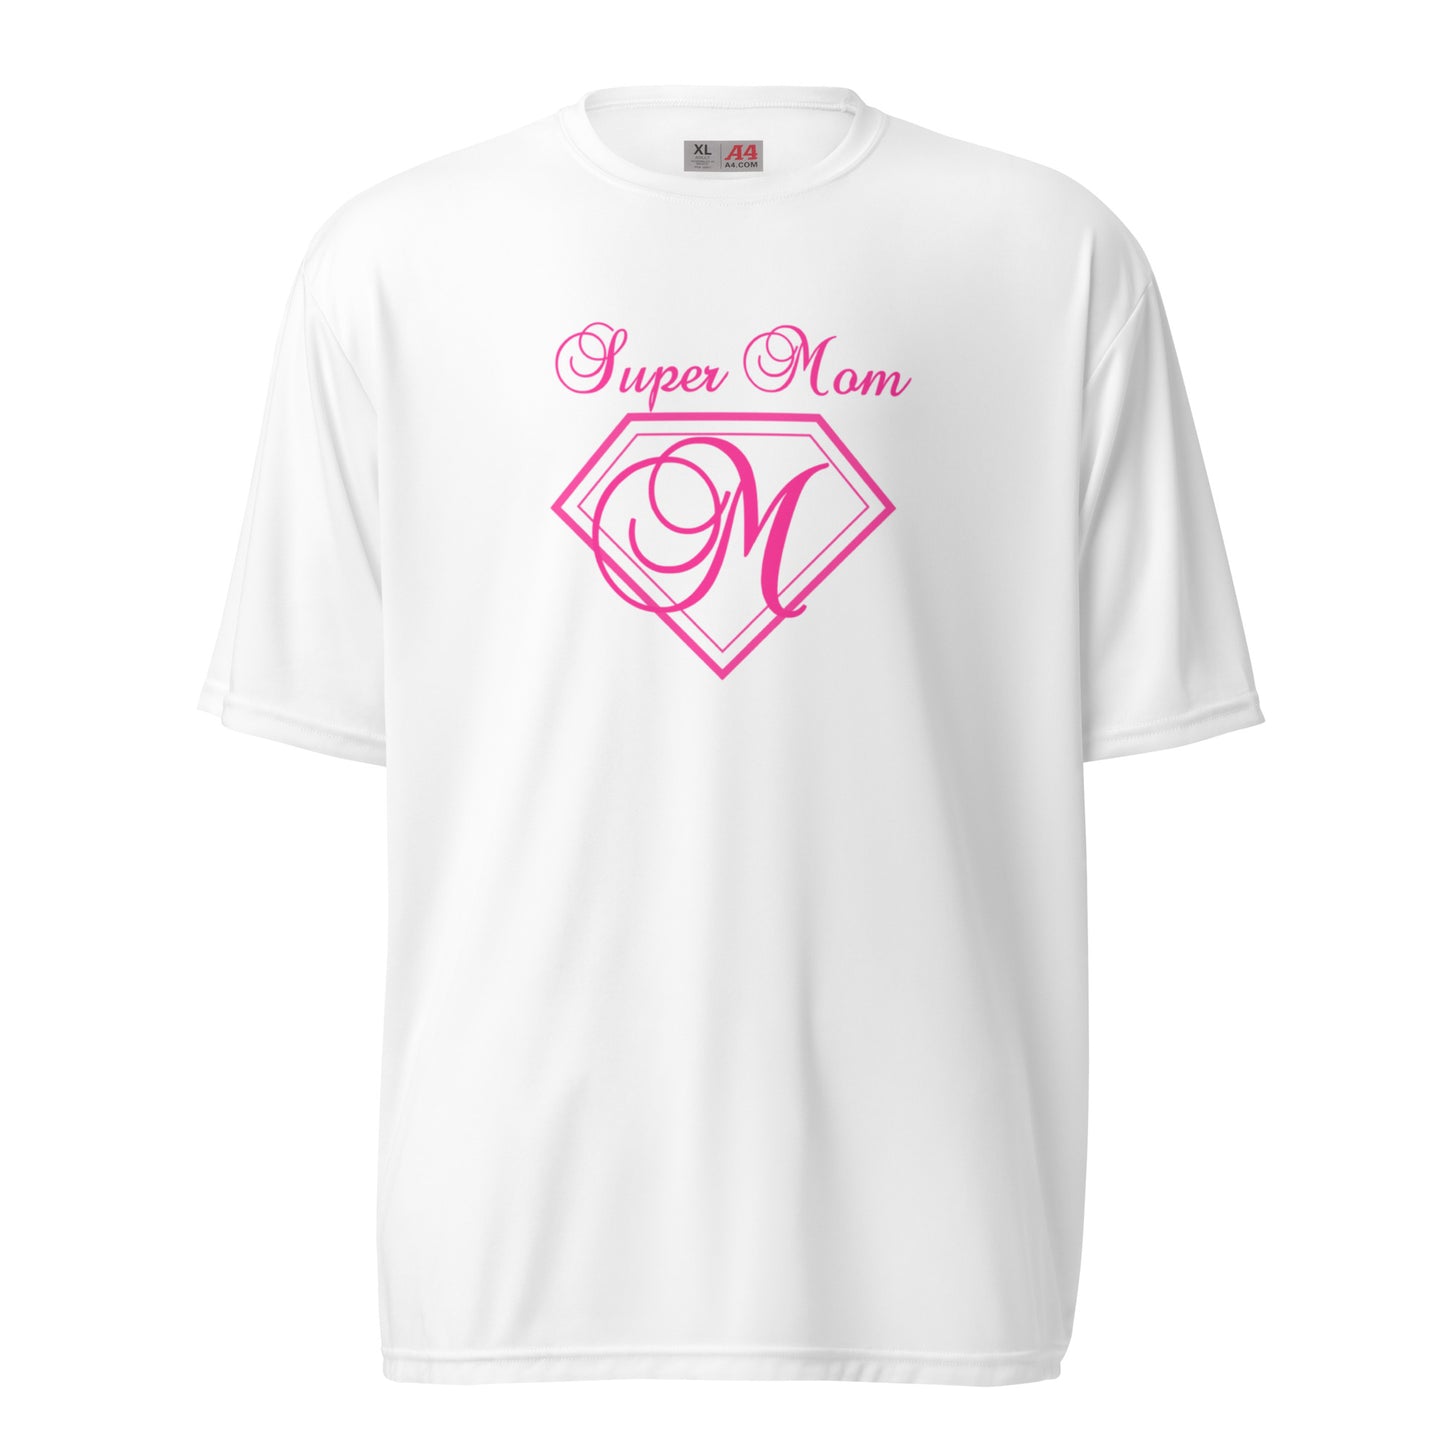 Super Mom unisex performance crew neck t-shirt - Pink Print